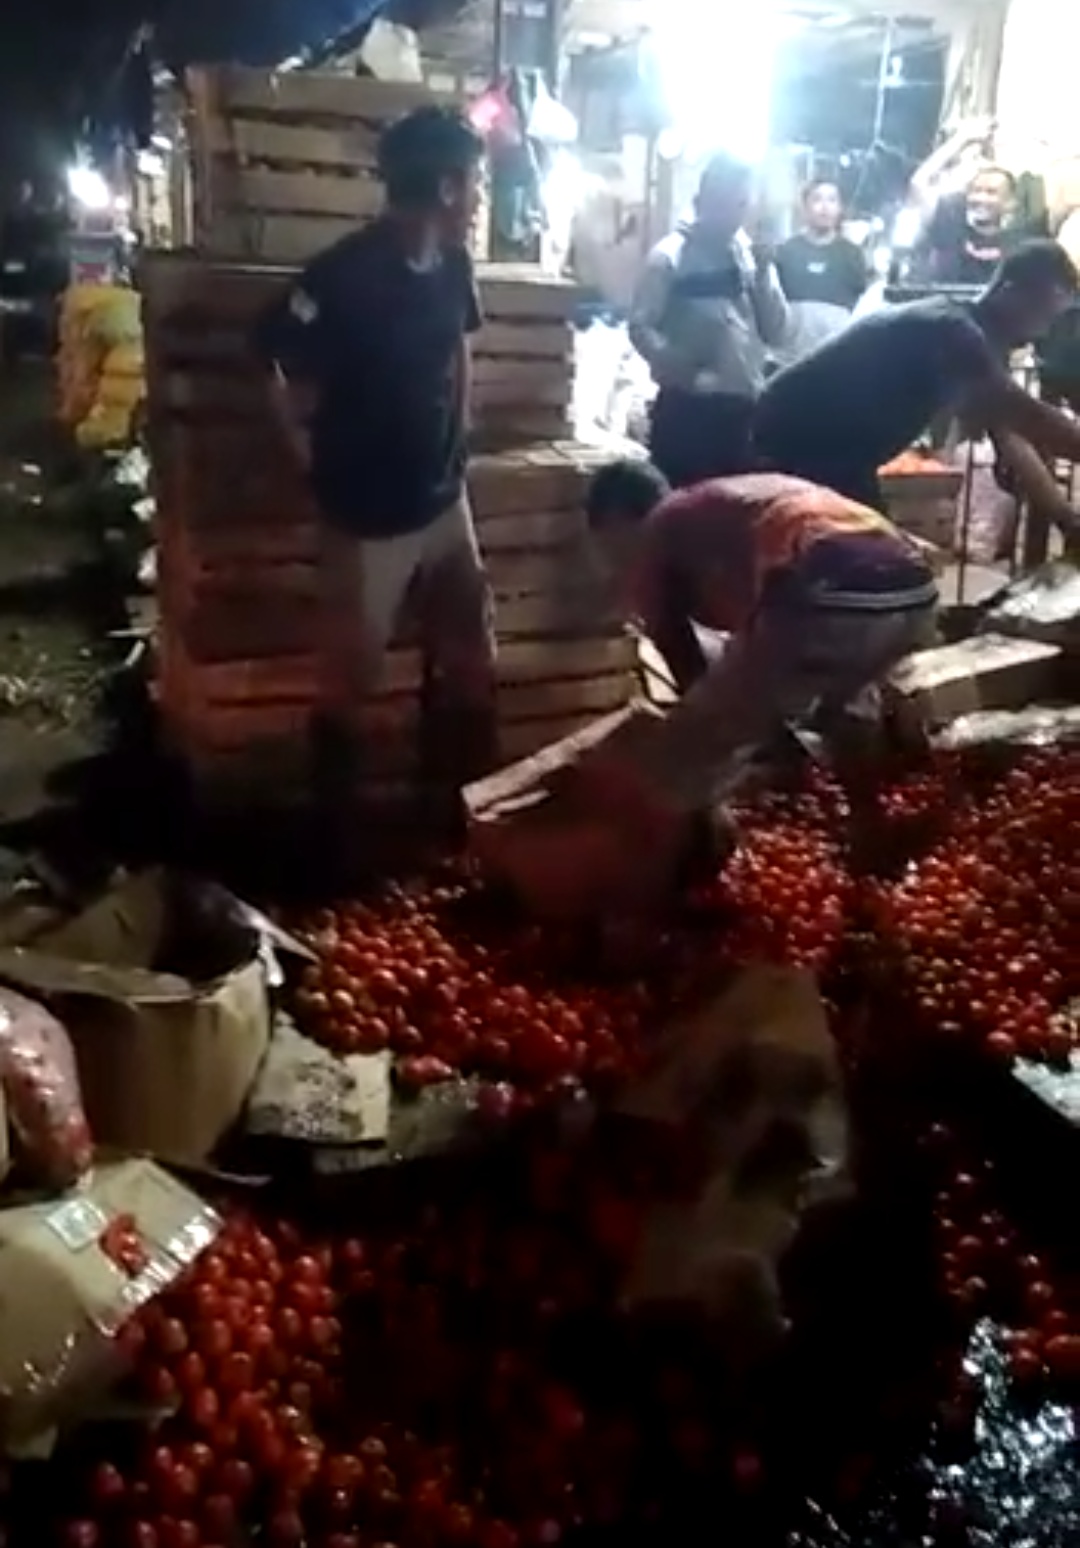 Harga Tomat Terjun Bebas Harga Pupuk Malah Naik, Petani:Pemerintah harus Bertindak